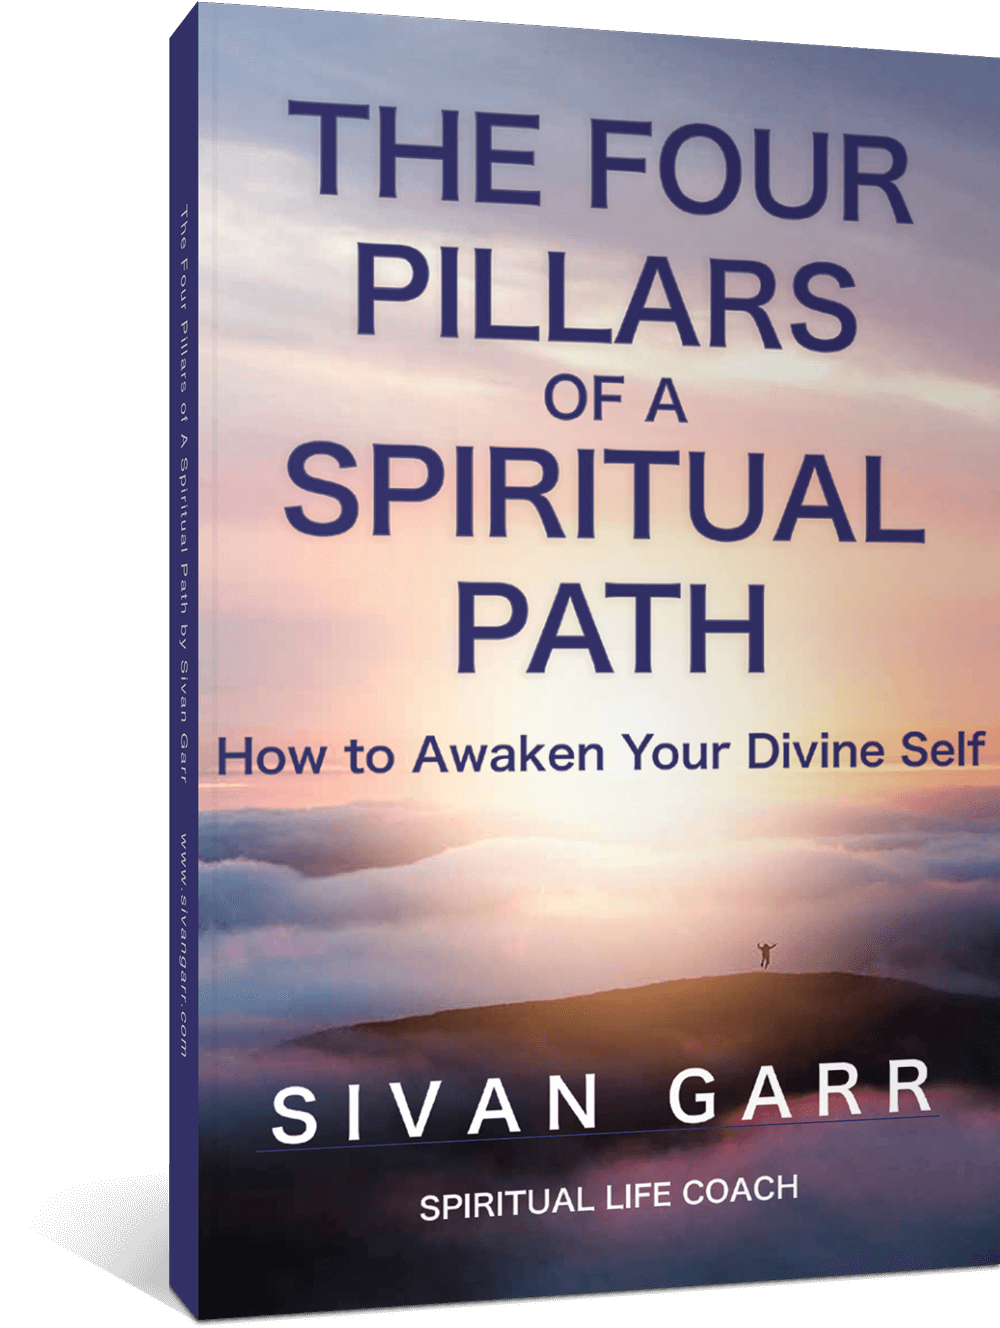 The Four Pillars of a Spiritual Path -- How to Awaken Your Divine Self by Sivan Garr